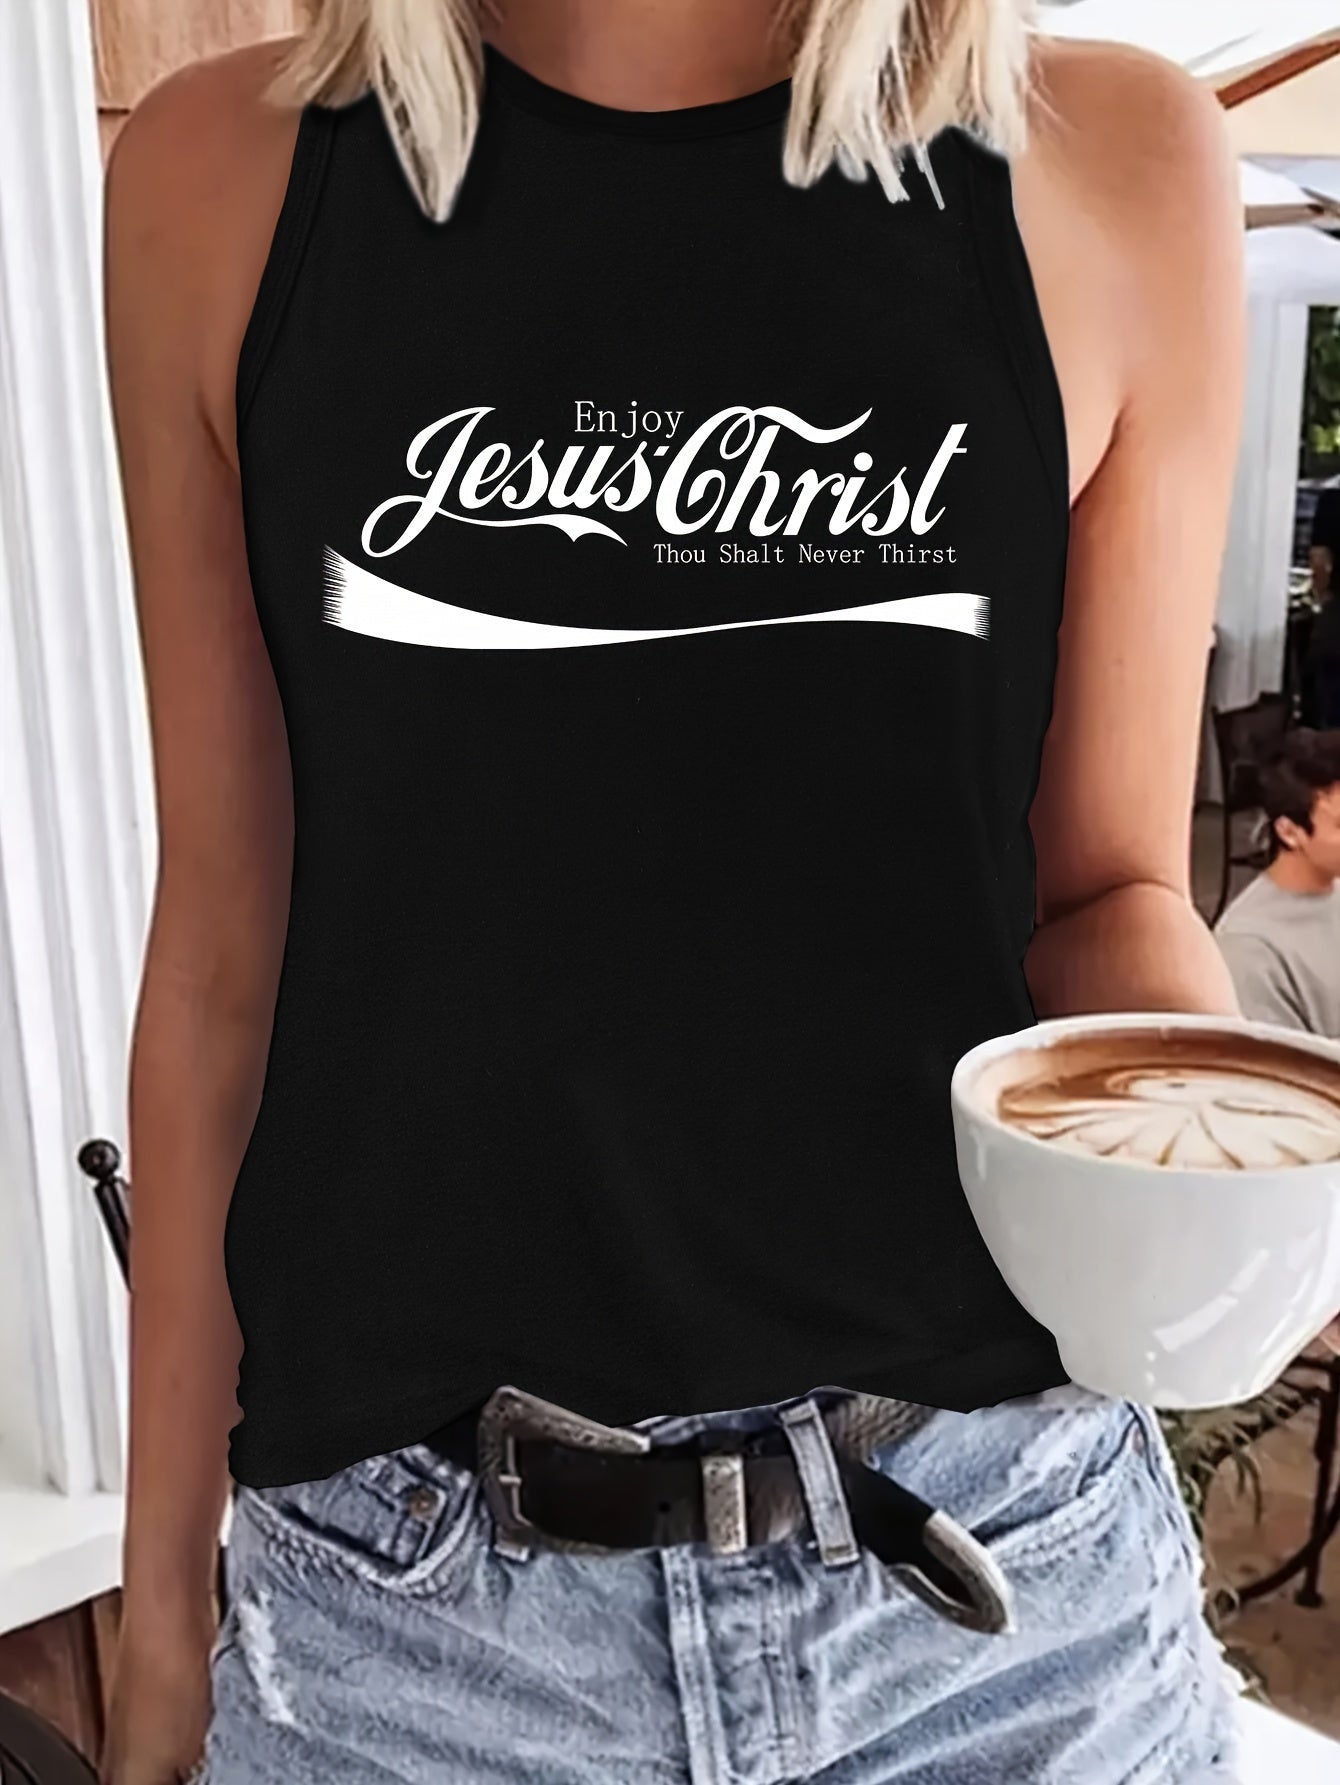 Enjoy Jesus Christ Thou Shalt Never Thirst Women's Christian Tank Top claimedbygoddesigns